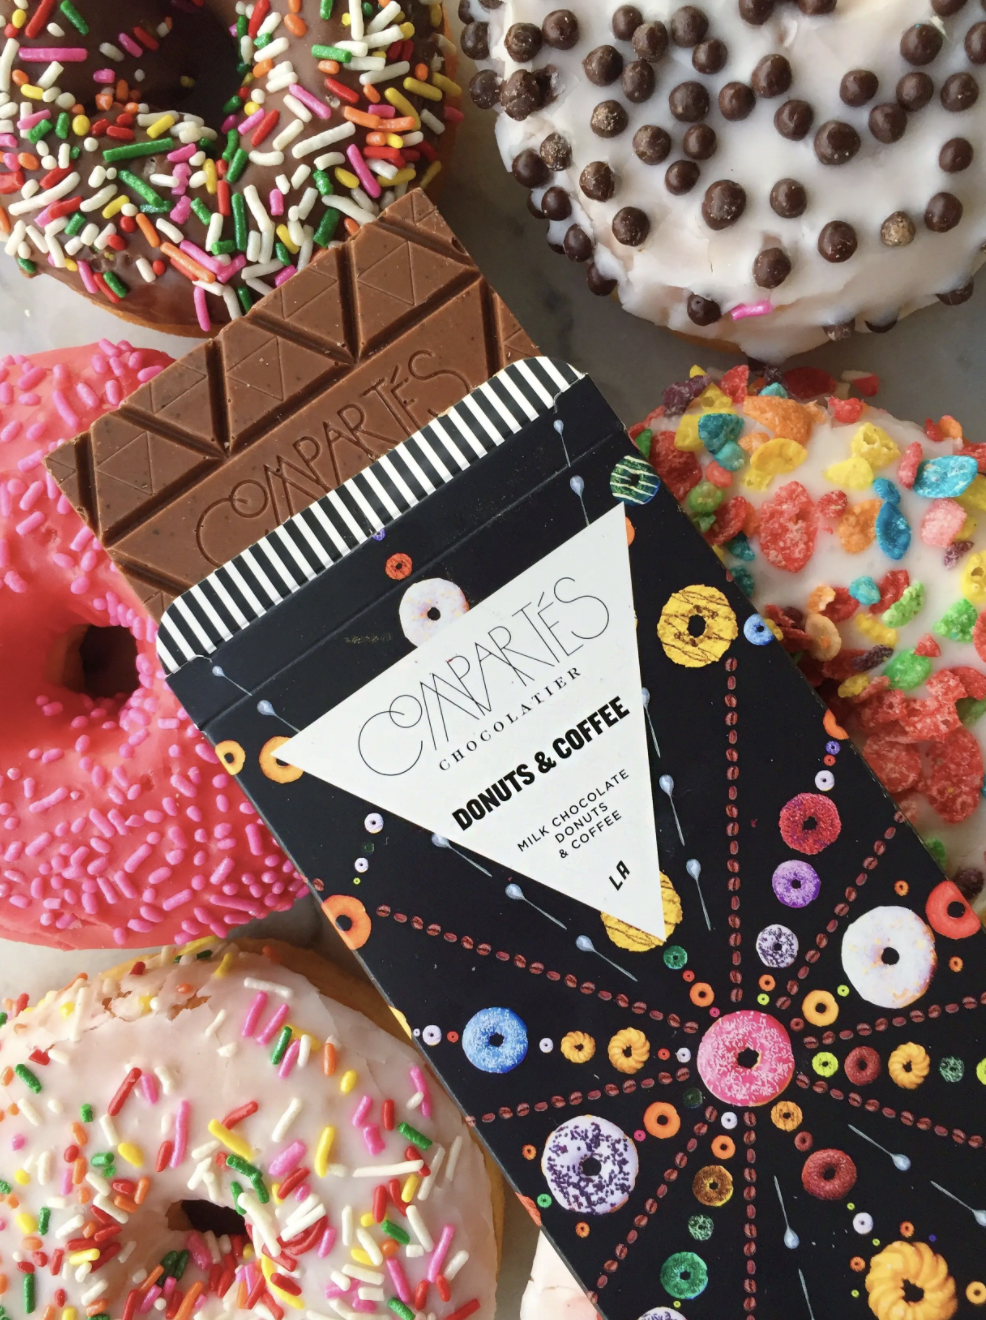 Compartes Donuts & Coffee Milk Chocolate | Prelude & Dawn | Los Angeles, CA